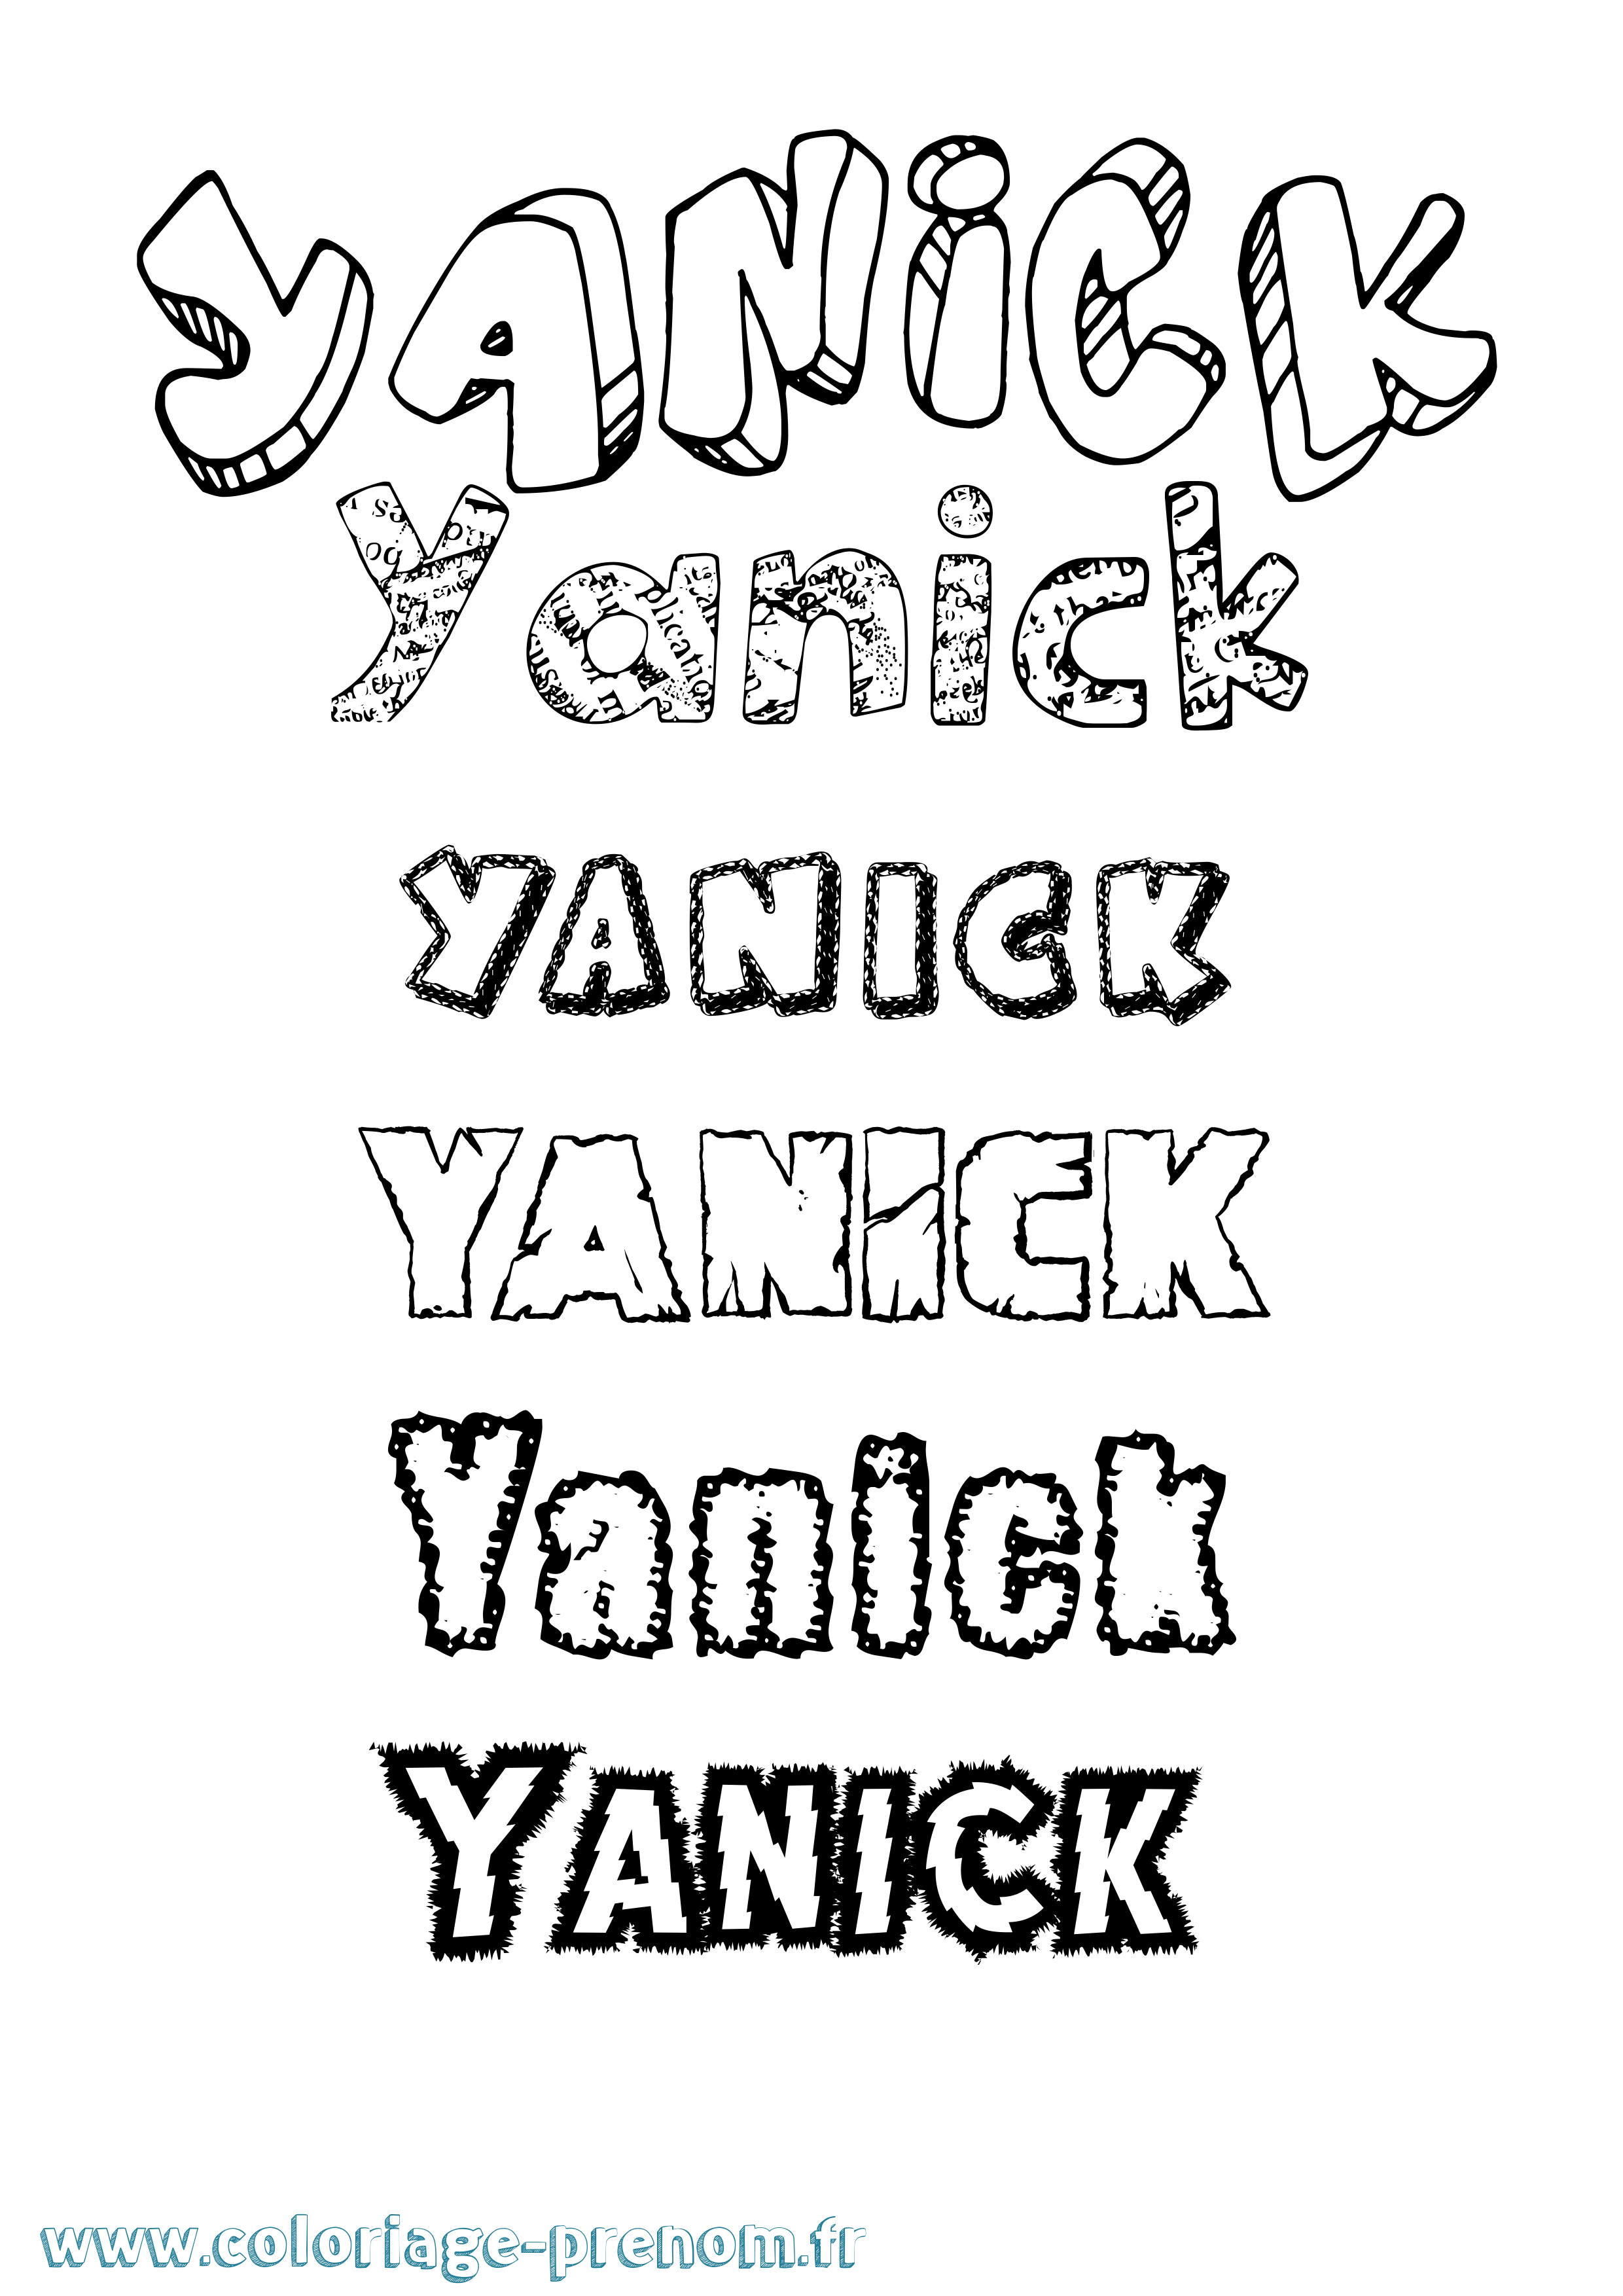 Coloriage prénom Yanick Destructuré